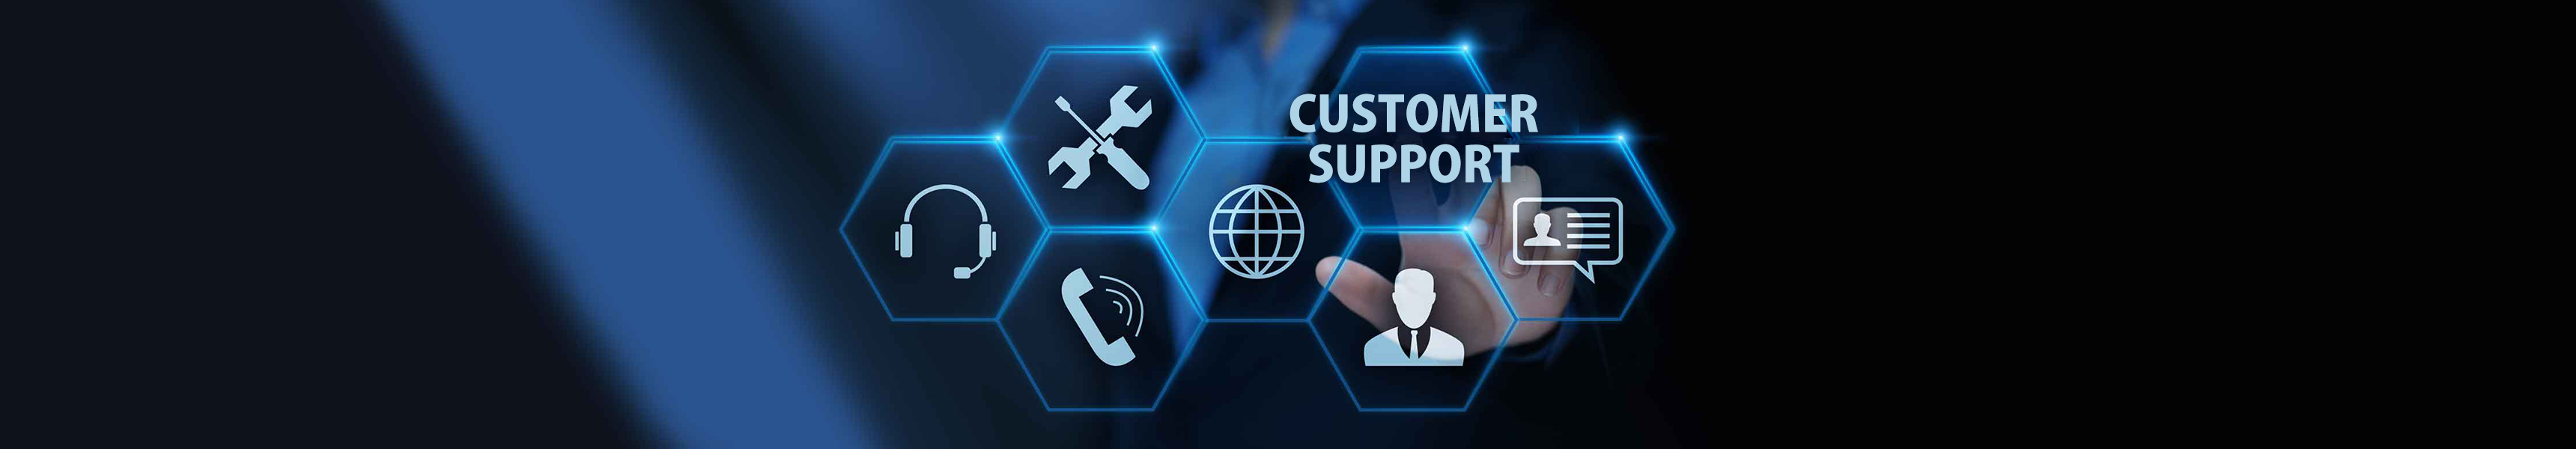 customer-support-banner